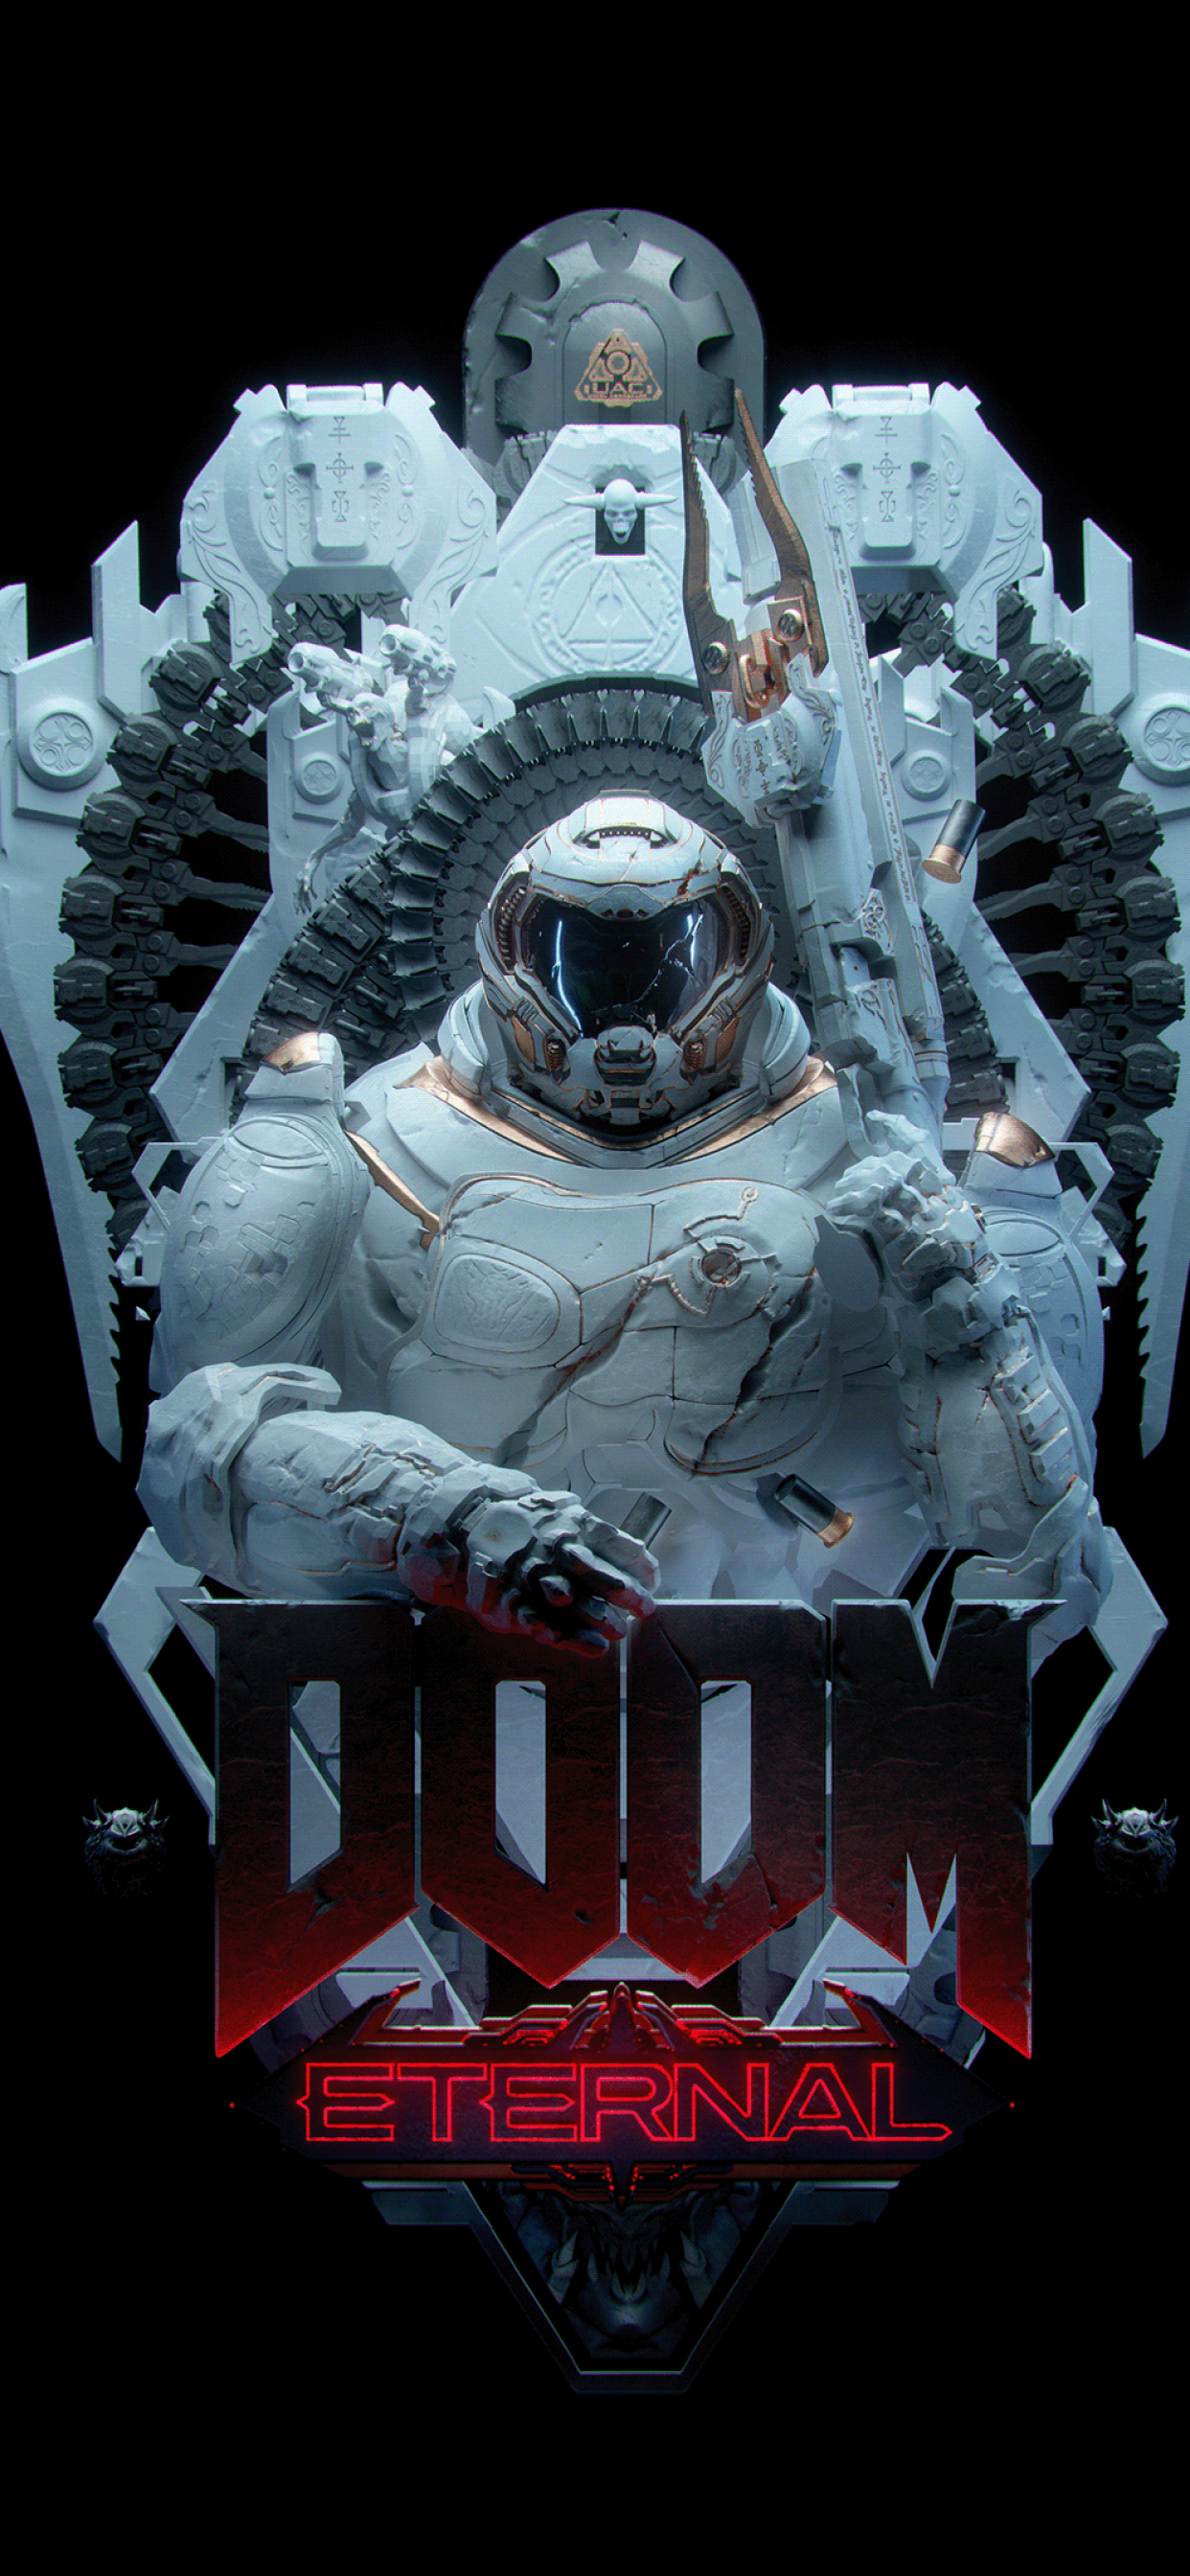 Doom guy 1080P 2k 4k Full HD Wallpapers Backgrounds Free Download   Wallpaper Crafter